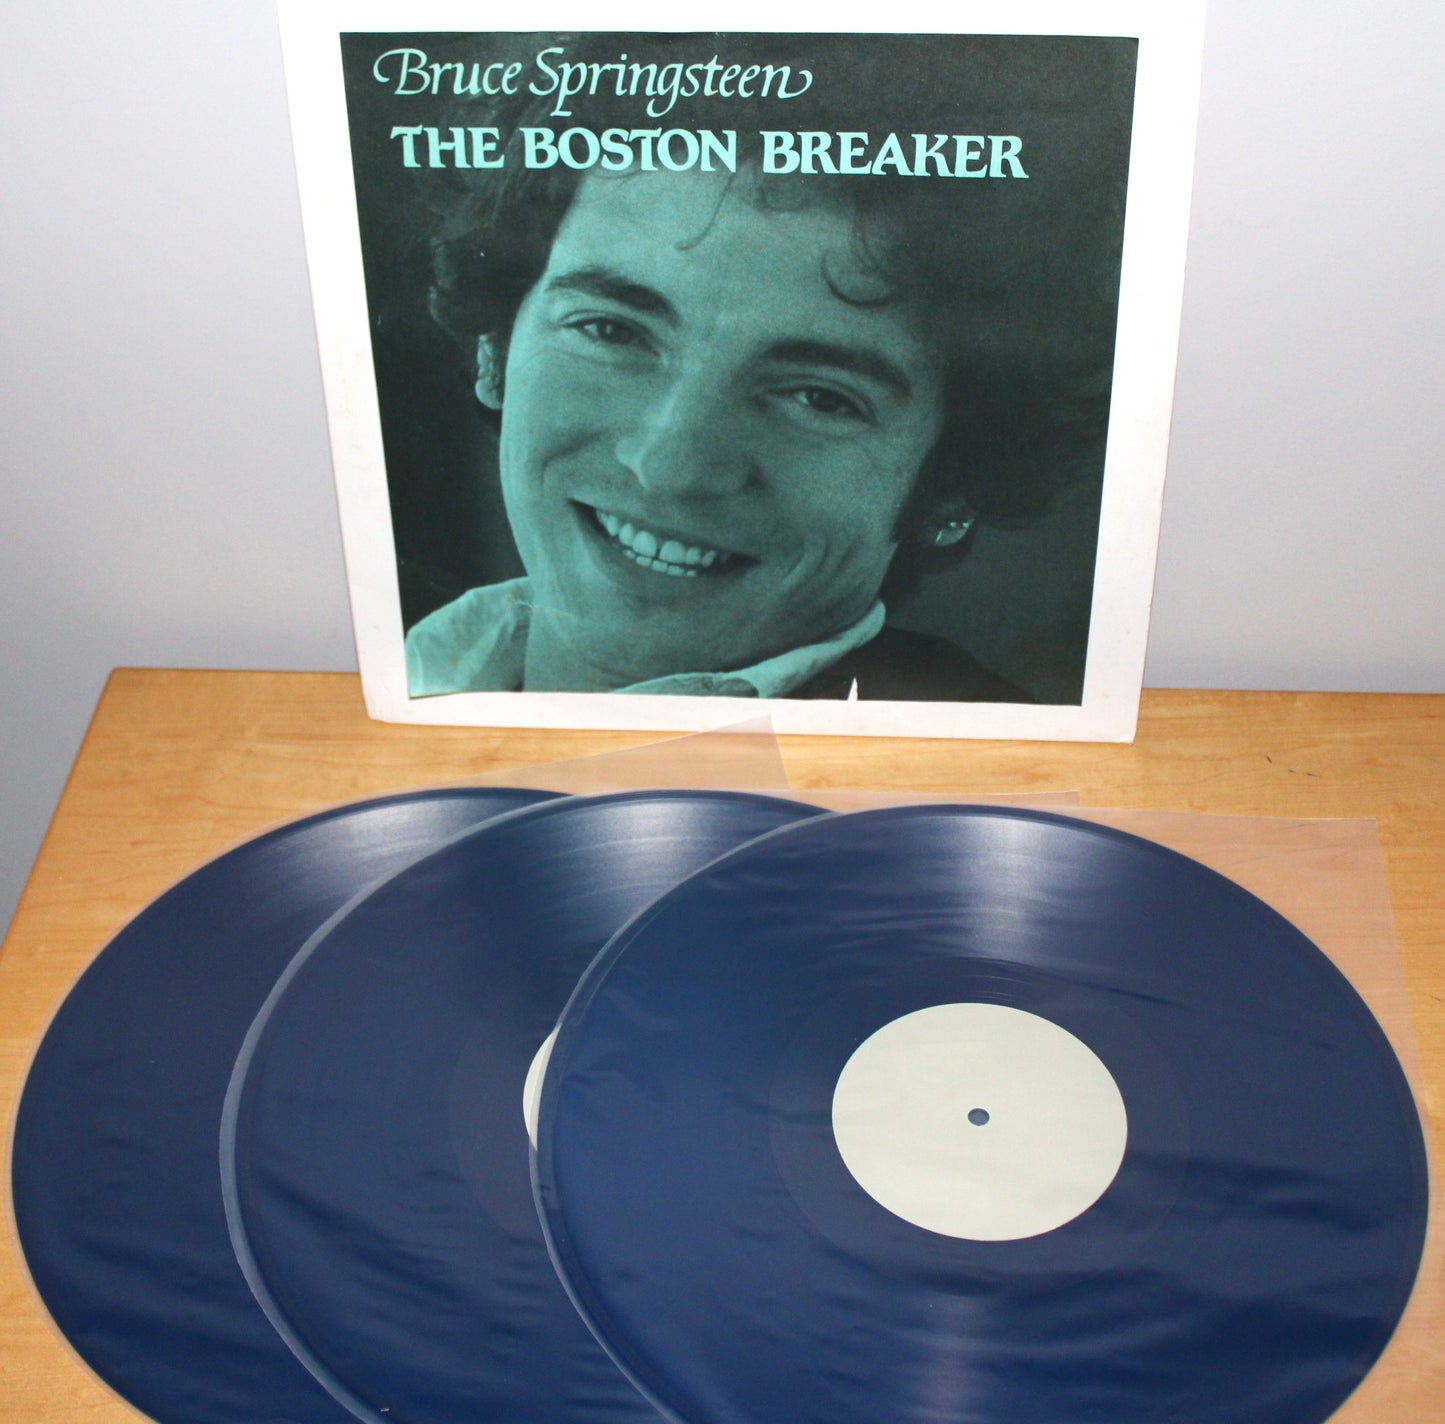 Bruce Springsteen – The Boston Breaker – Unofficial blue color Vinyl 3LPs, rare find for Boston fans!